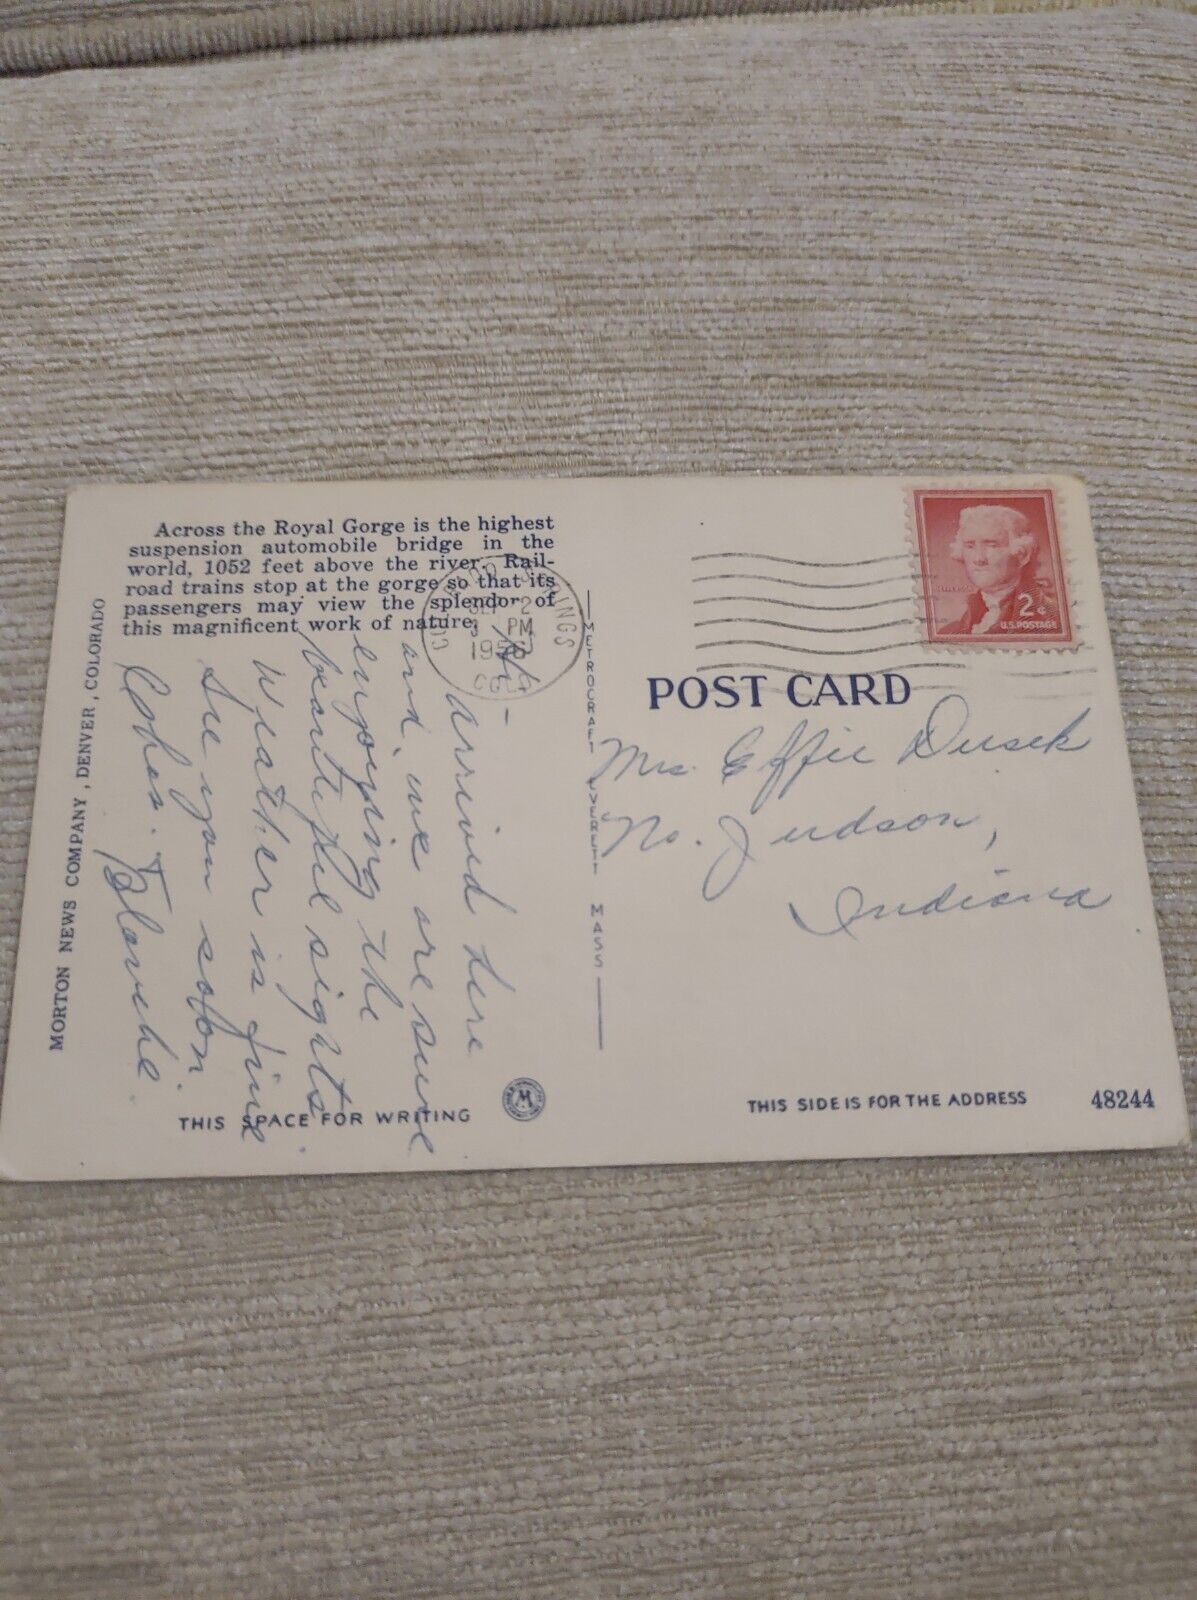 1956 Postcards